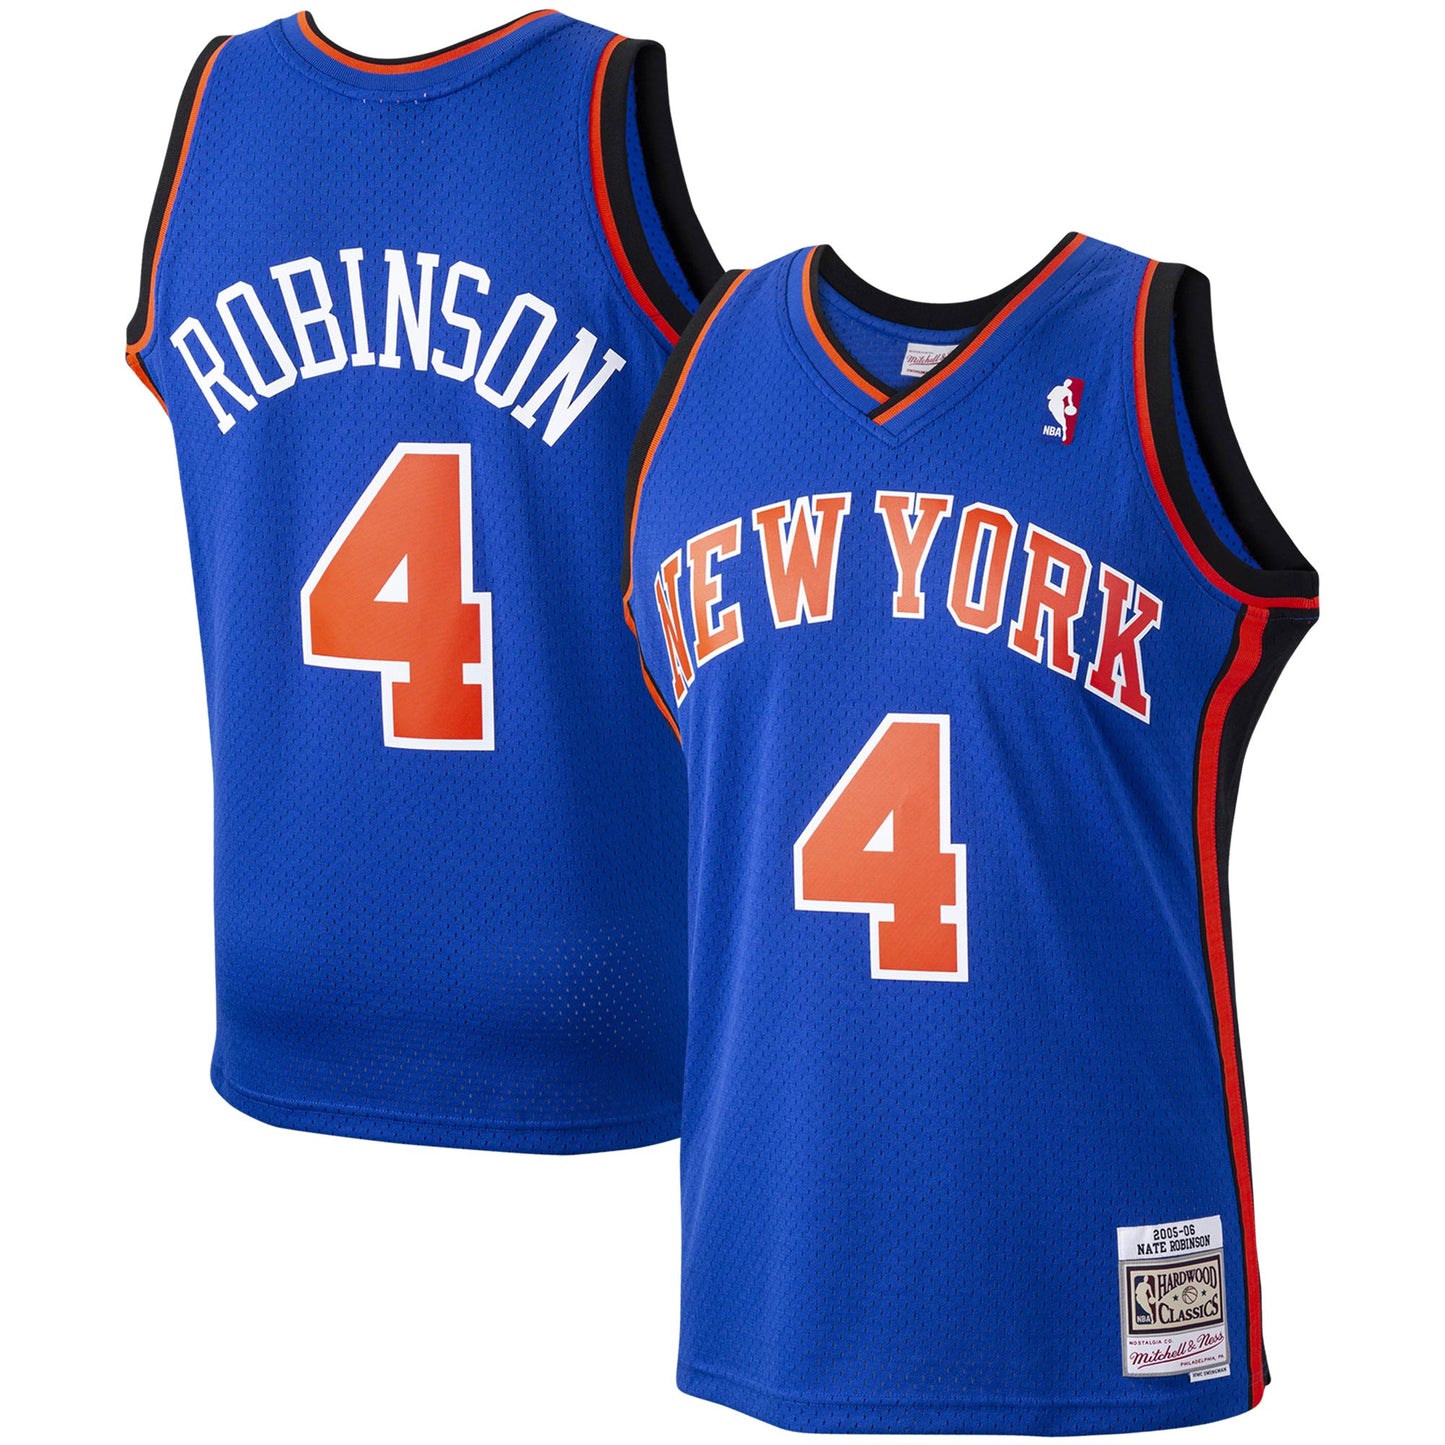 Nate Robinson New York Knicks Mitchell & Ness Hardwood Classics Swingman Jersey - Blue